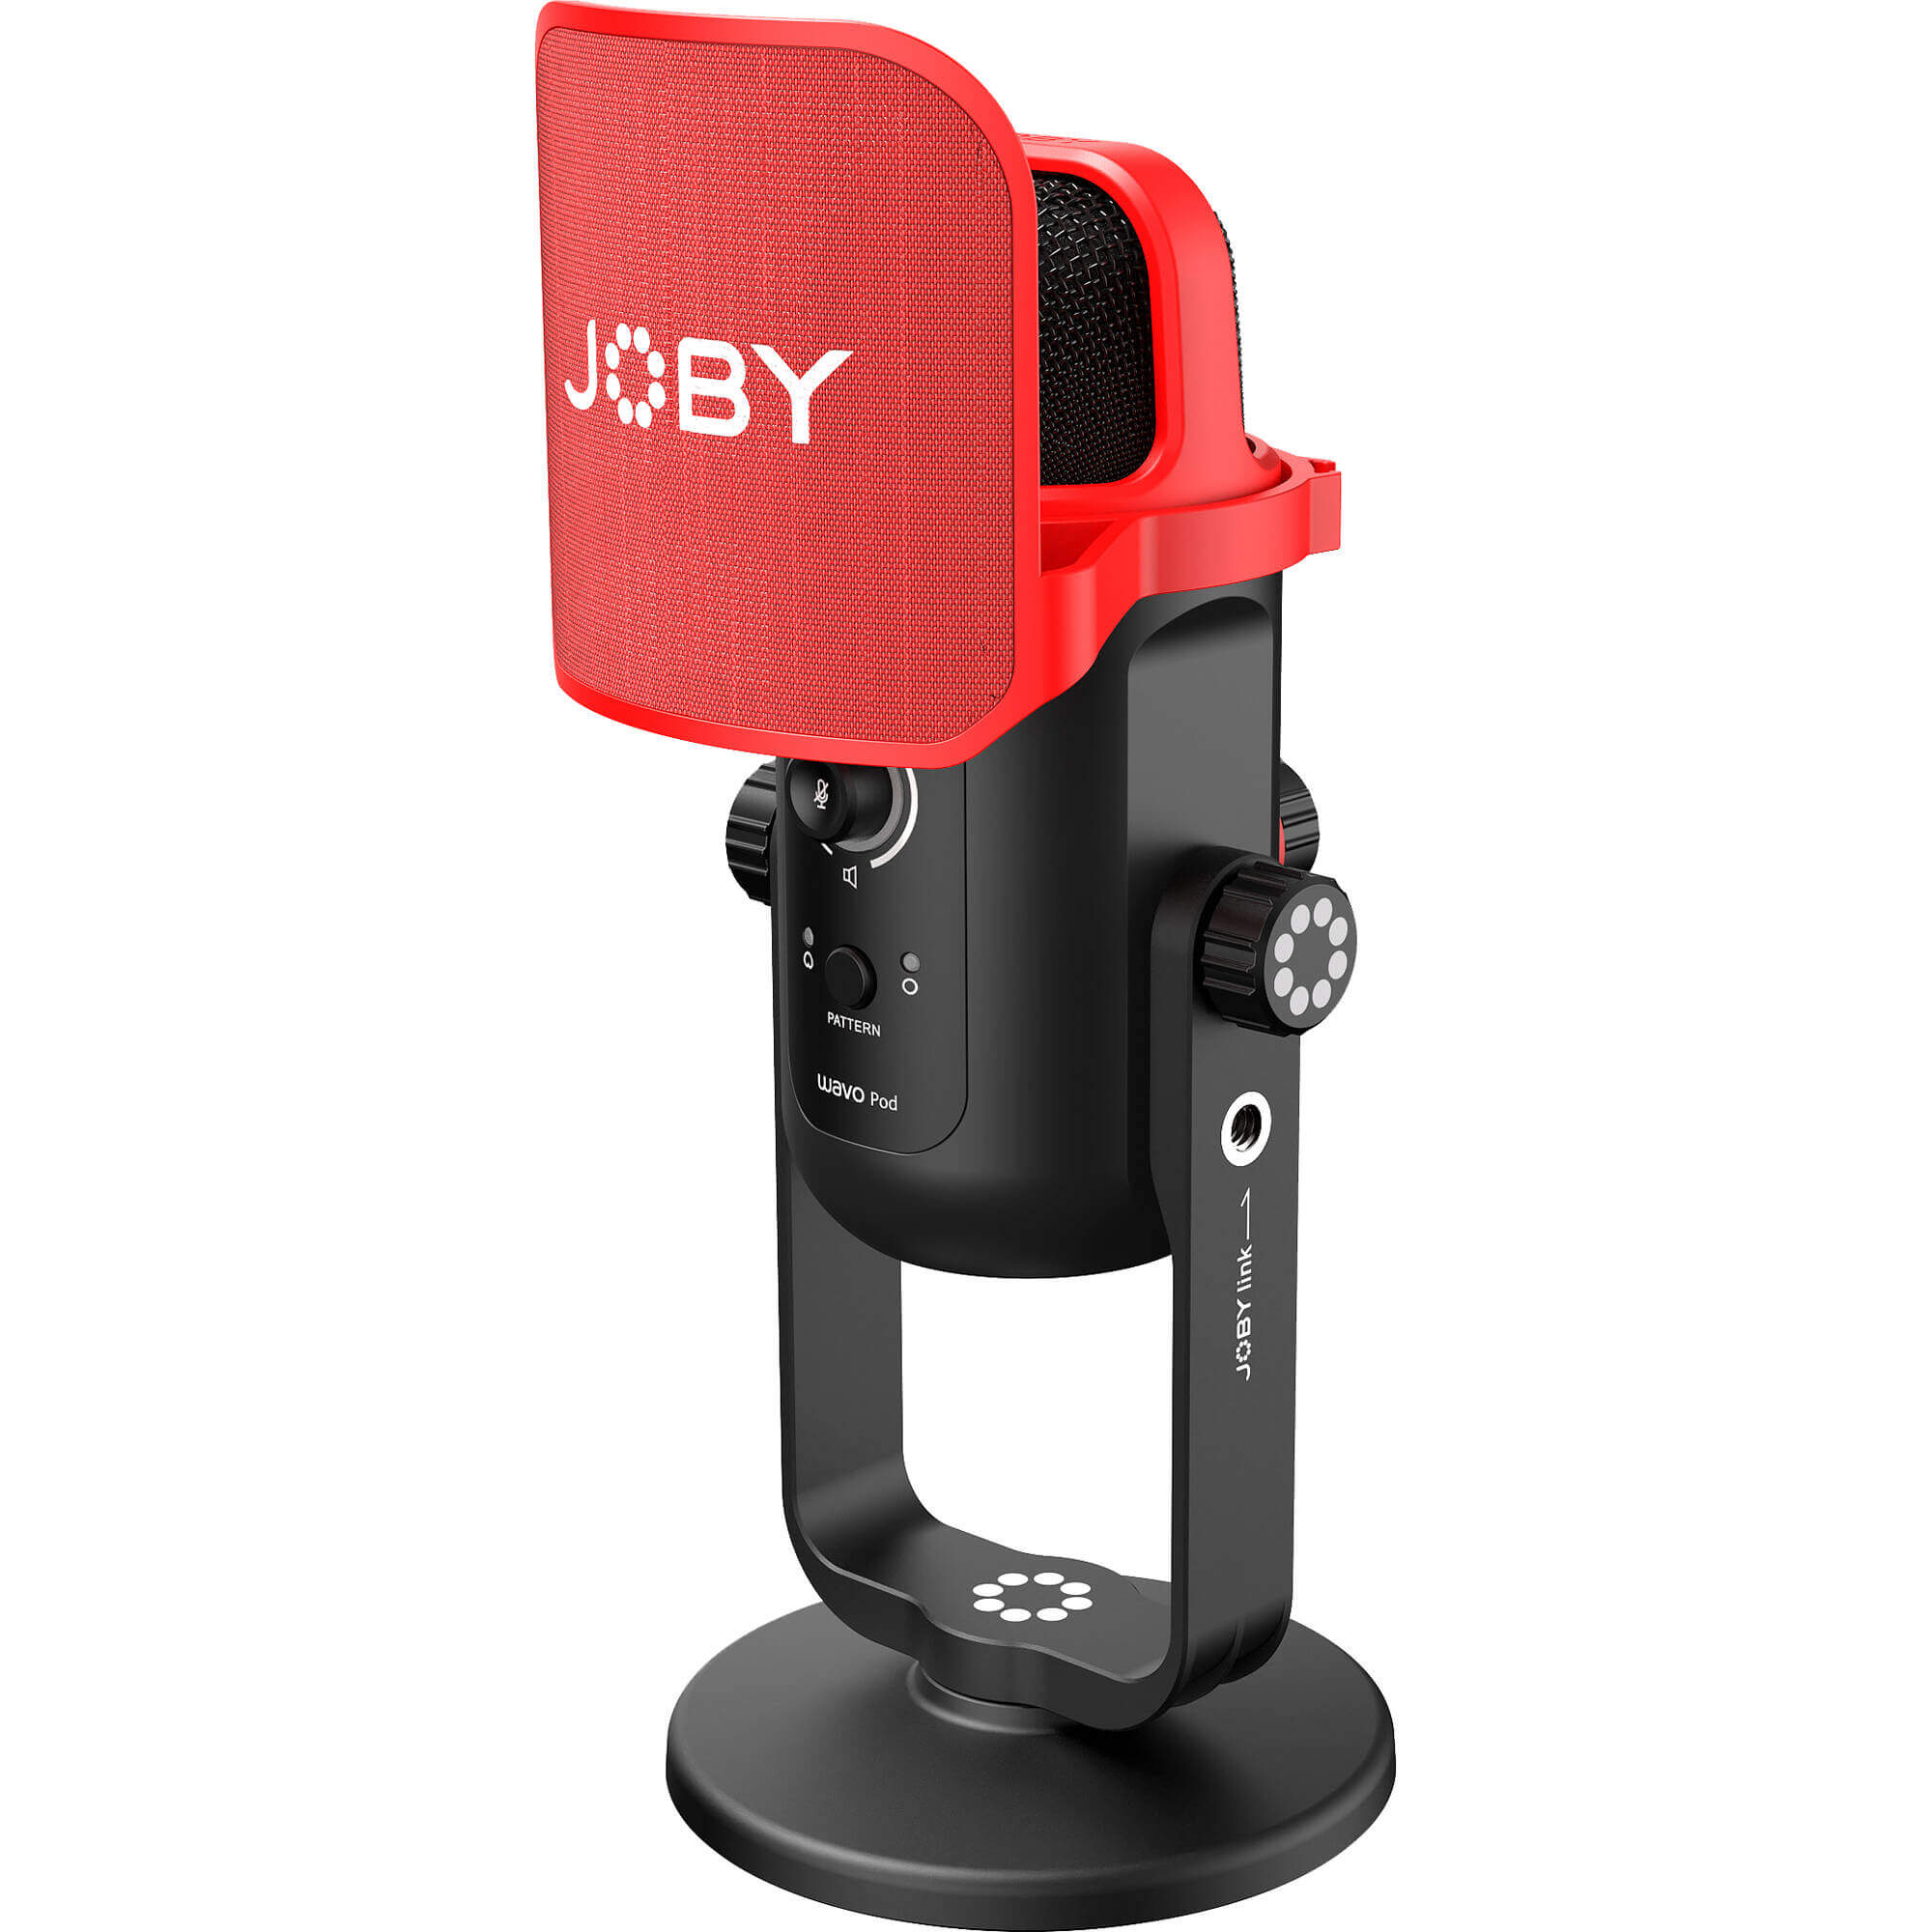 JOBY Wavo POD Desktop USB Microphone REVIEW